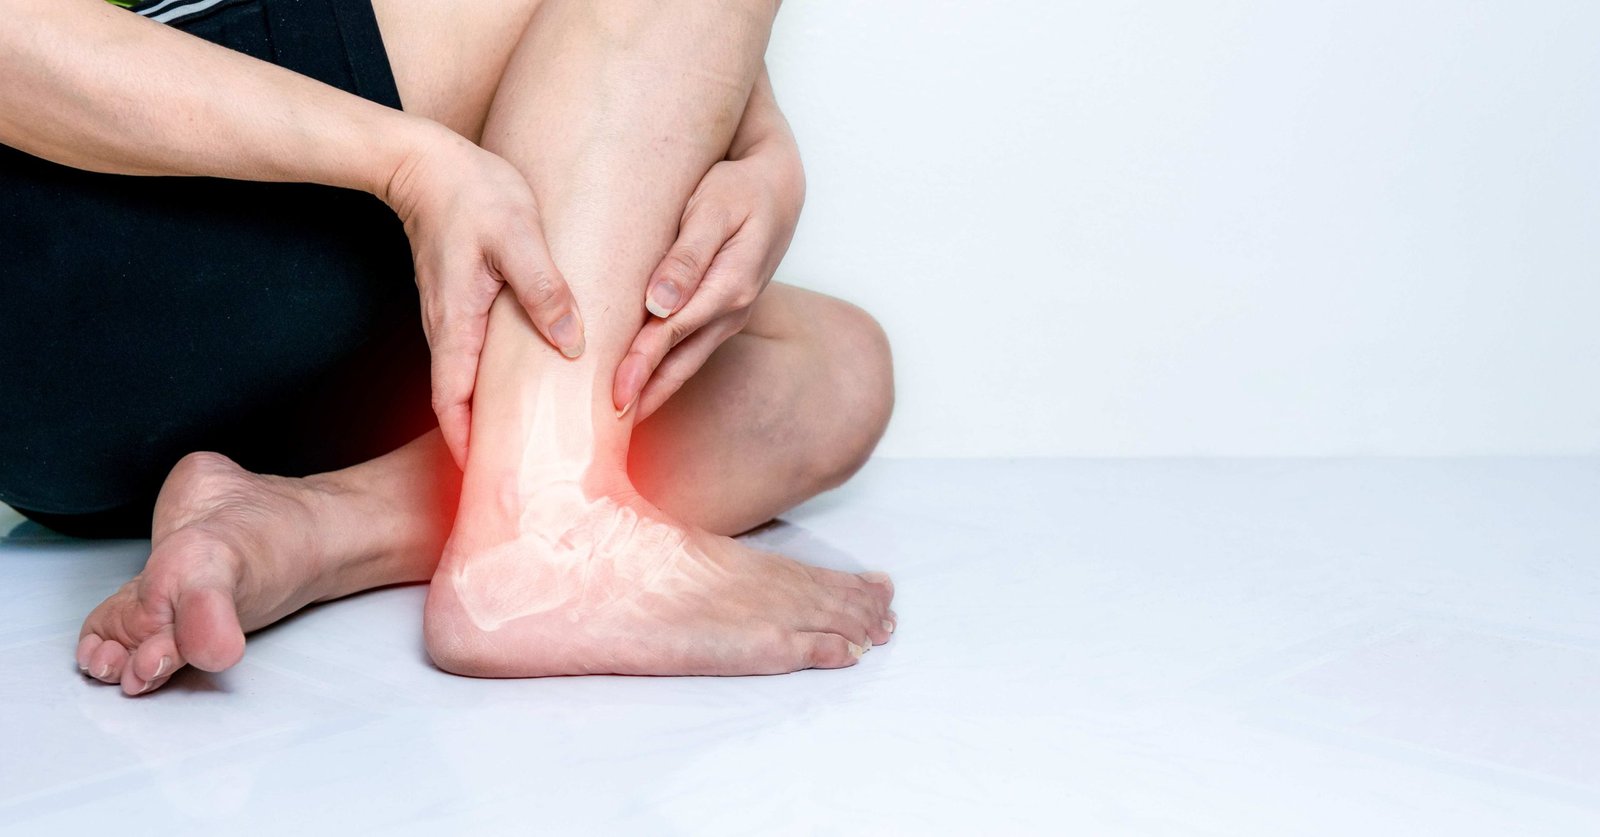 Ankle Sprain and Rotator Cuff Tendinitis?